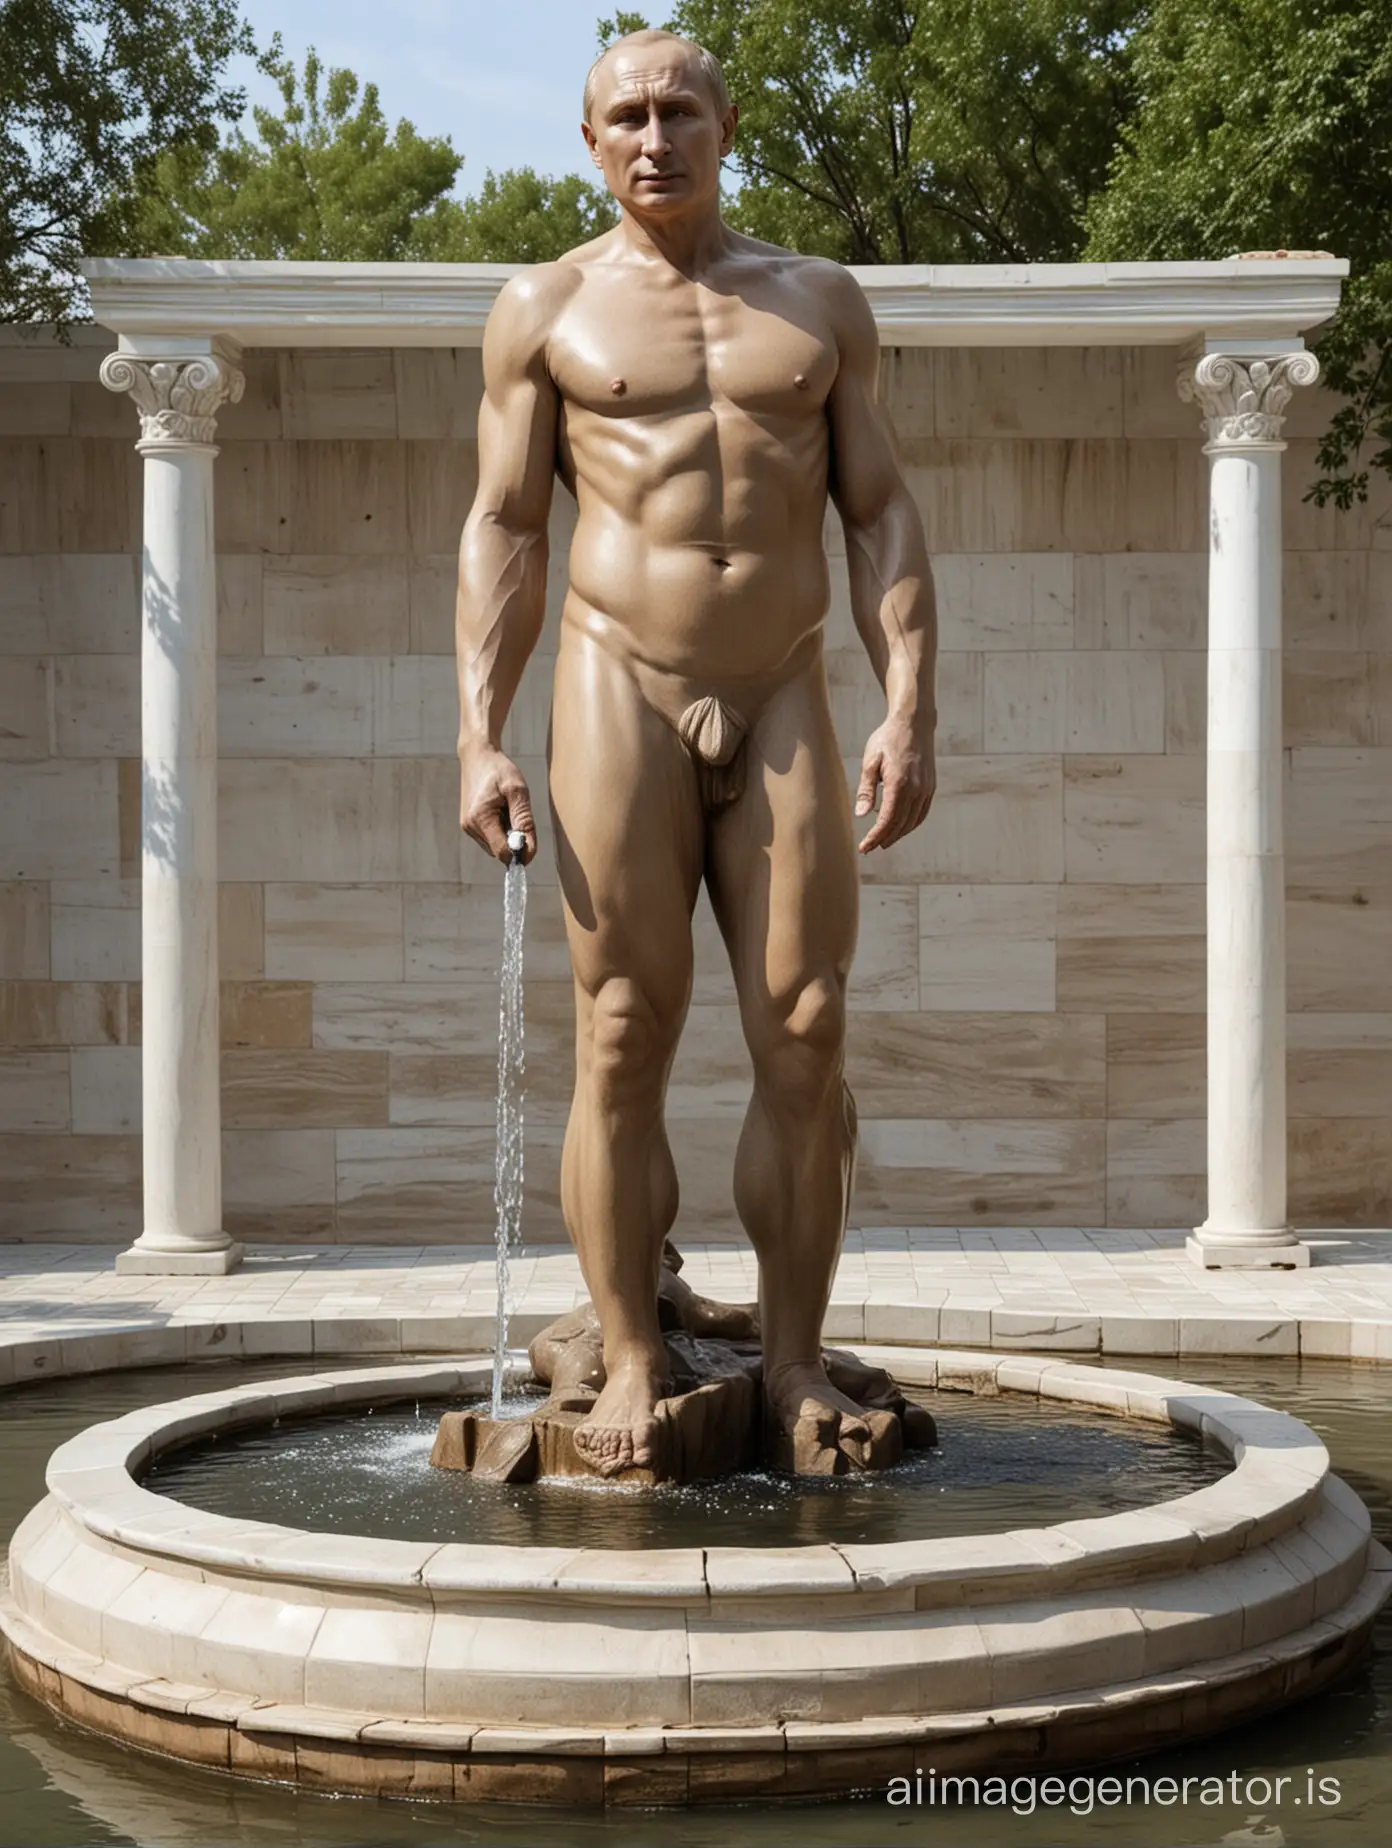 a Greek fountain resembling Vladimir Putin